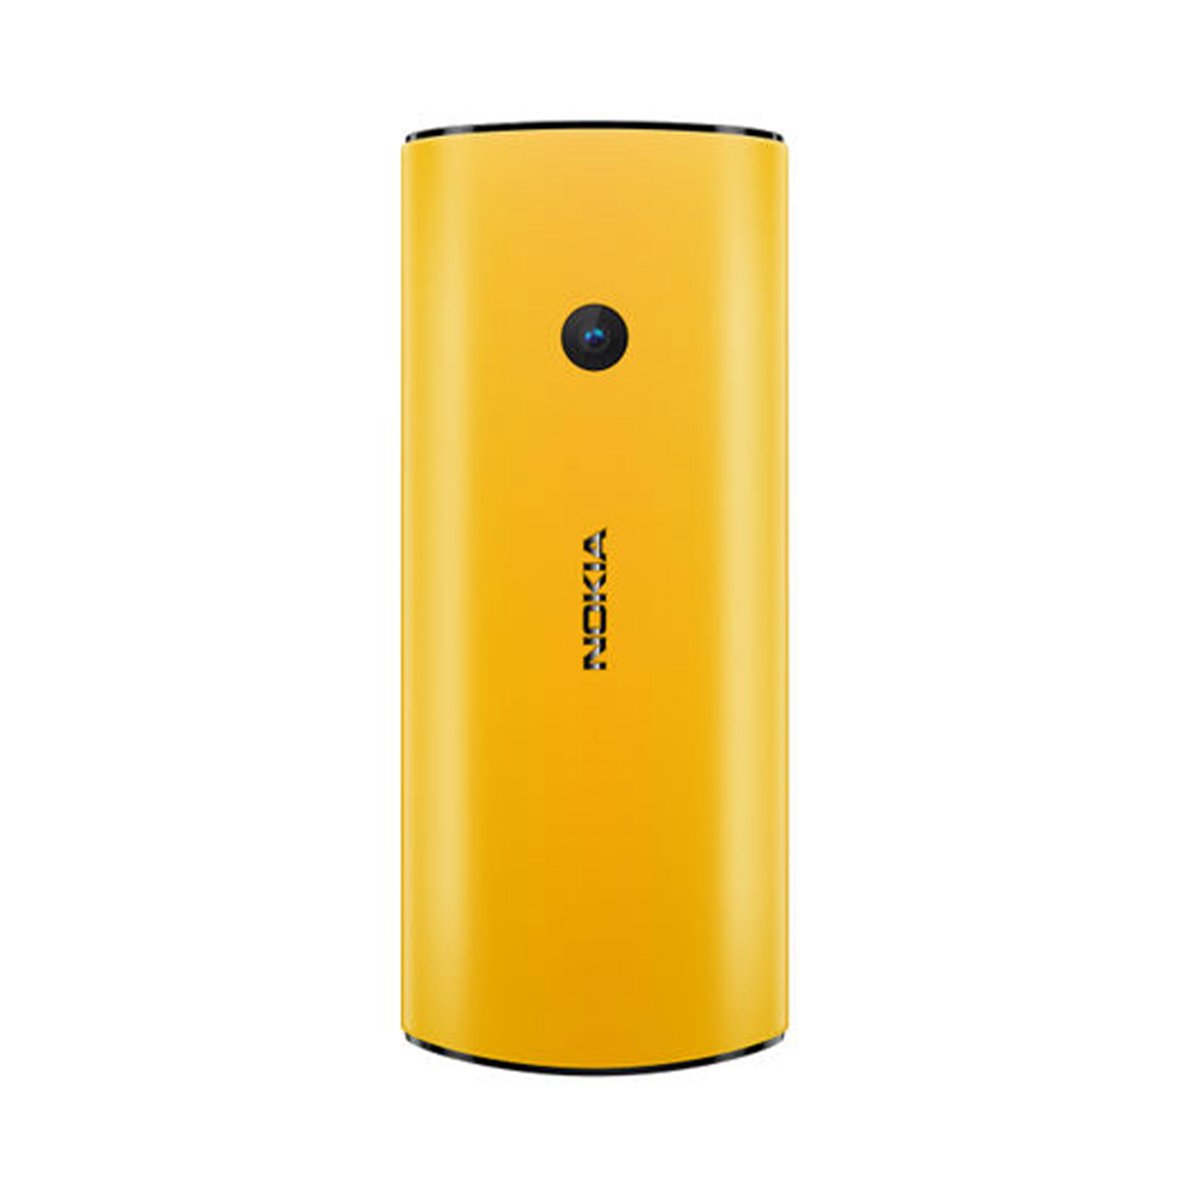 Nokia 110 -TA1384 4G DS Yellow